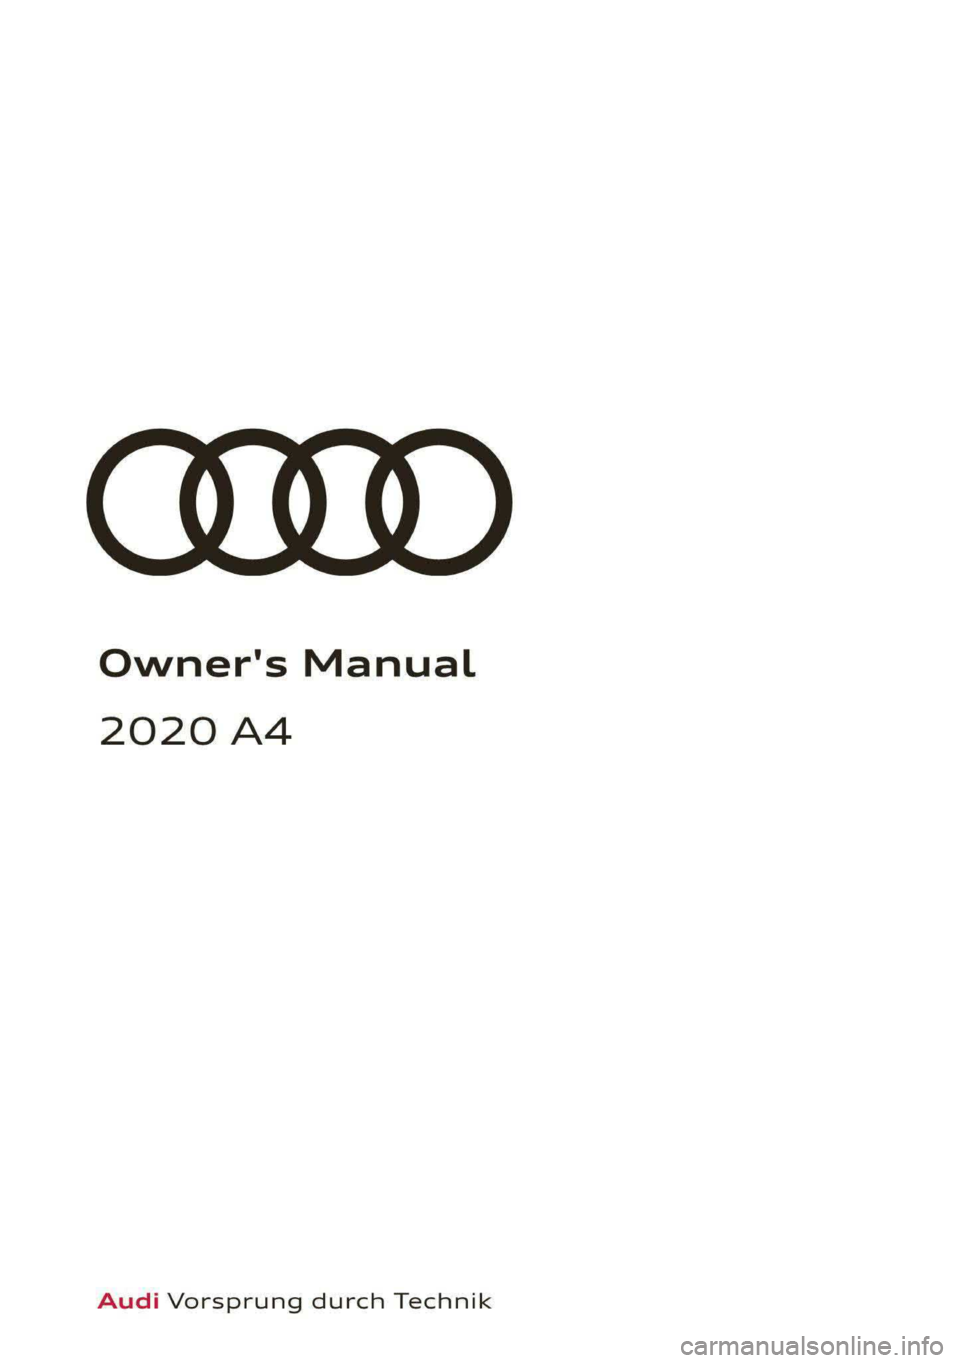 AUDI A4 2020  Owners Manual Owner's Manual 
2020 A4 
Audi Vorsprung durch Technik  